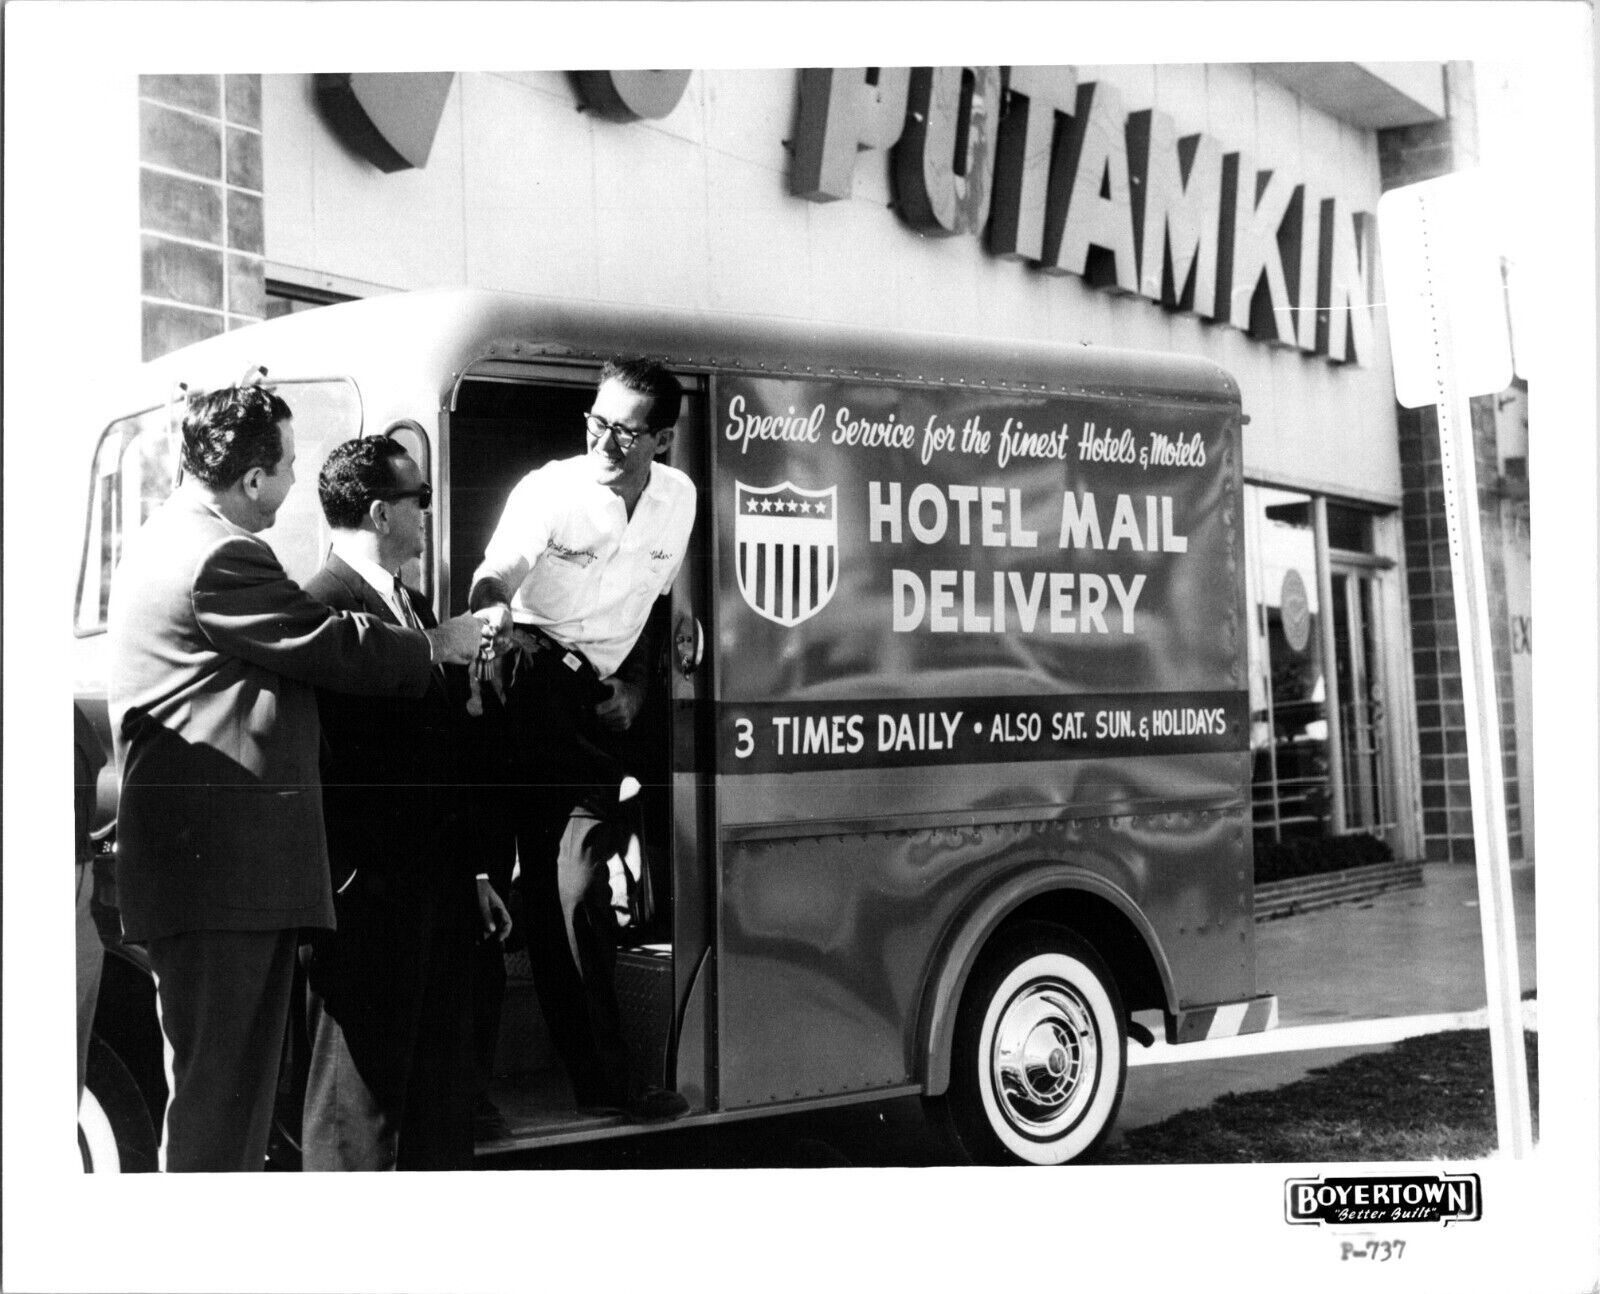 Vintage Hotel Mail Delivery truck Boyertown Truck Bodies B&W 8x10 Photo